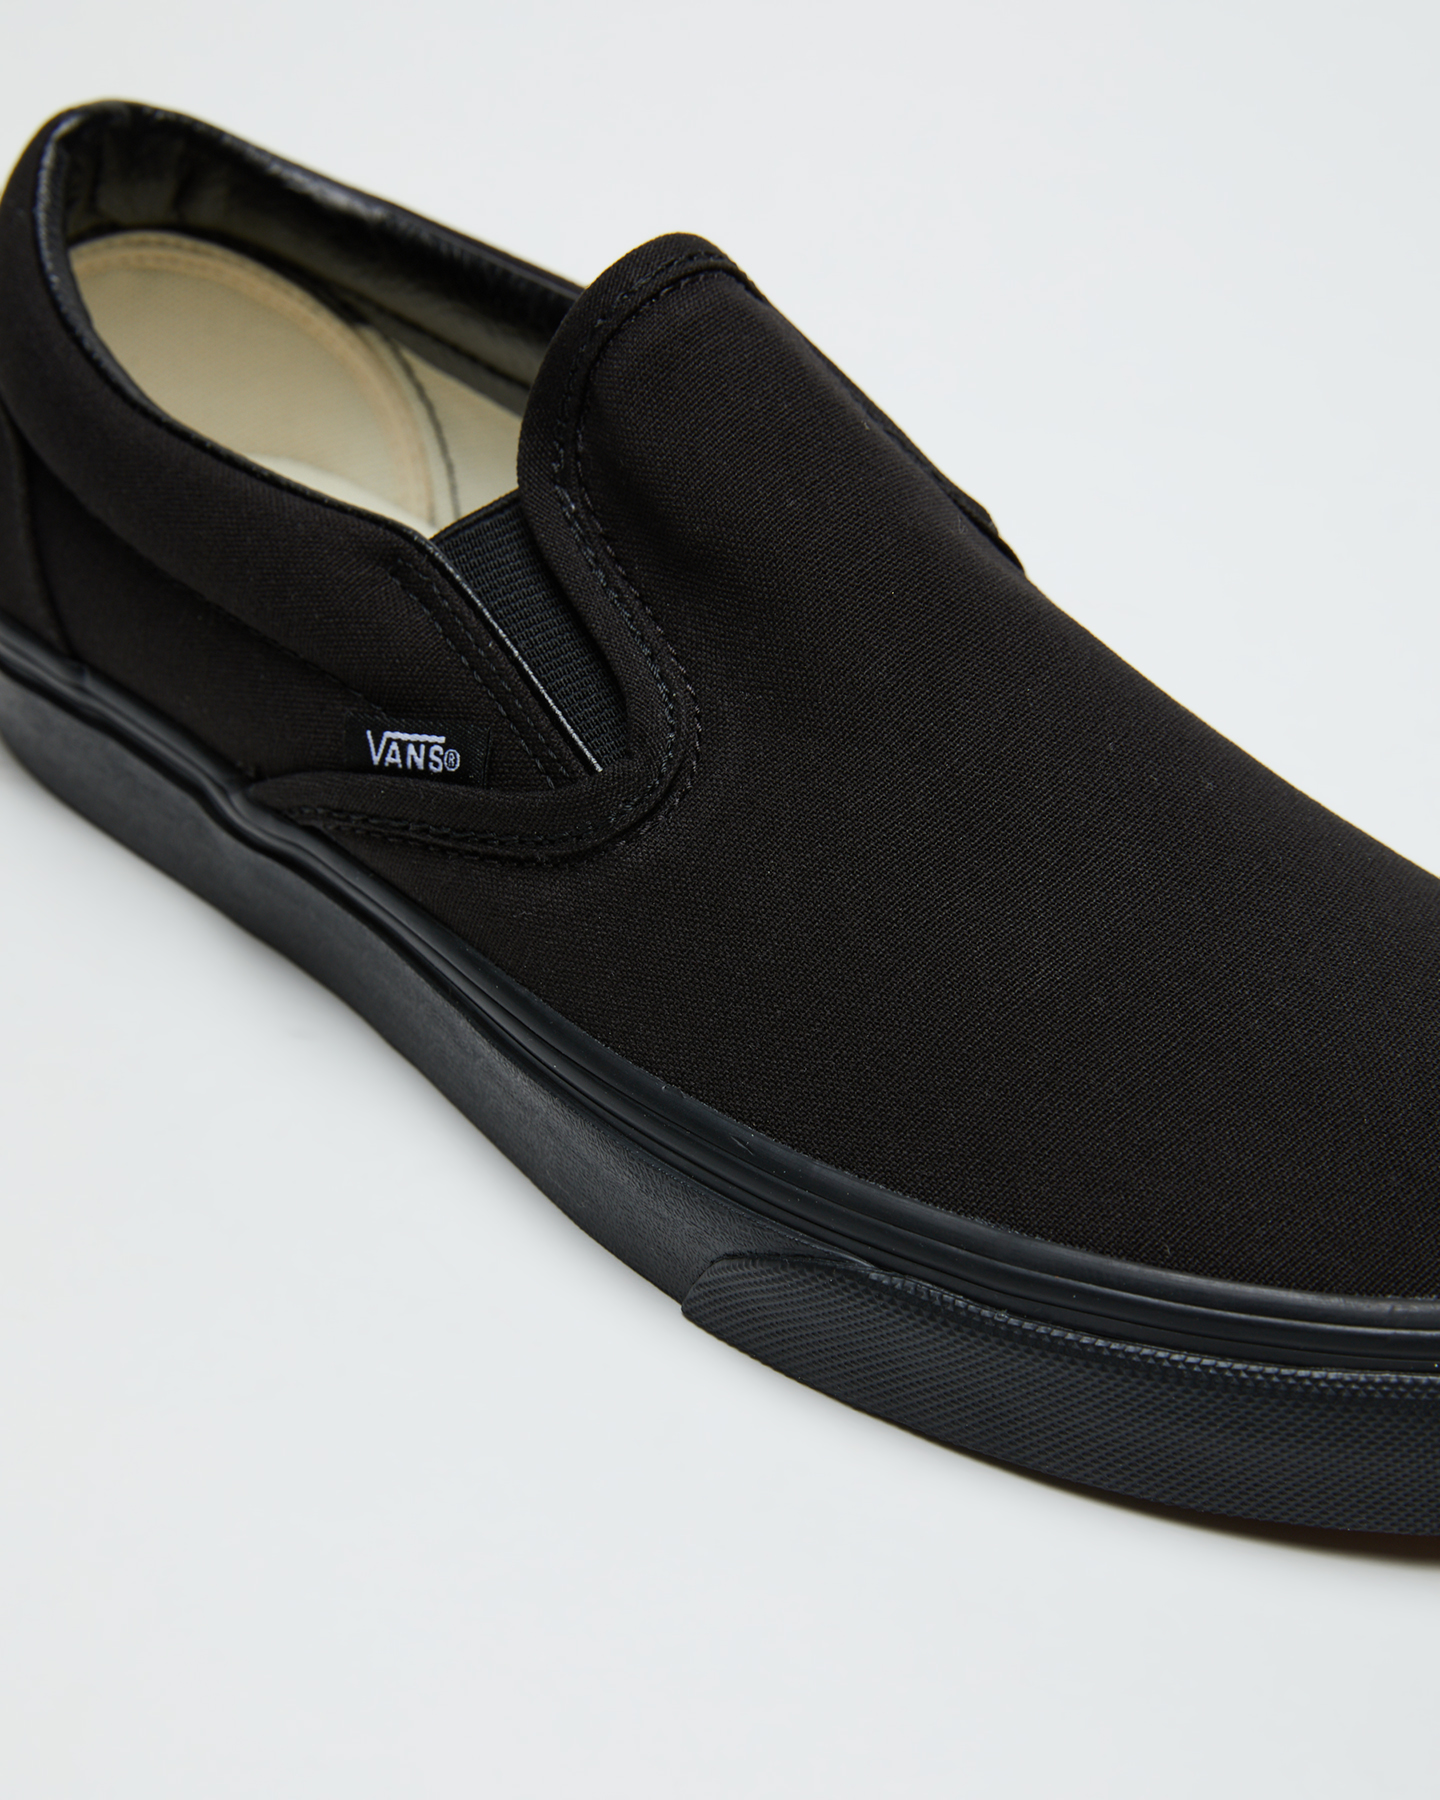 Vans Classic Slip On Shoe Black/Black | SurfStitch